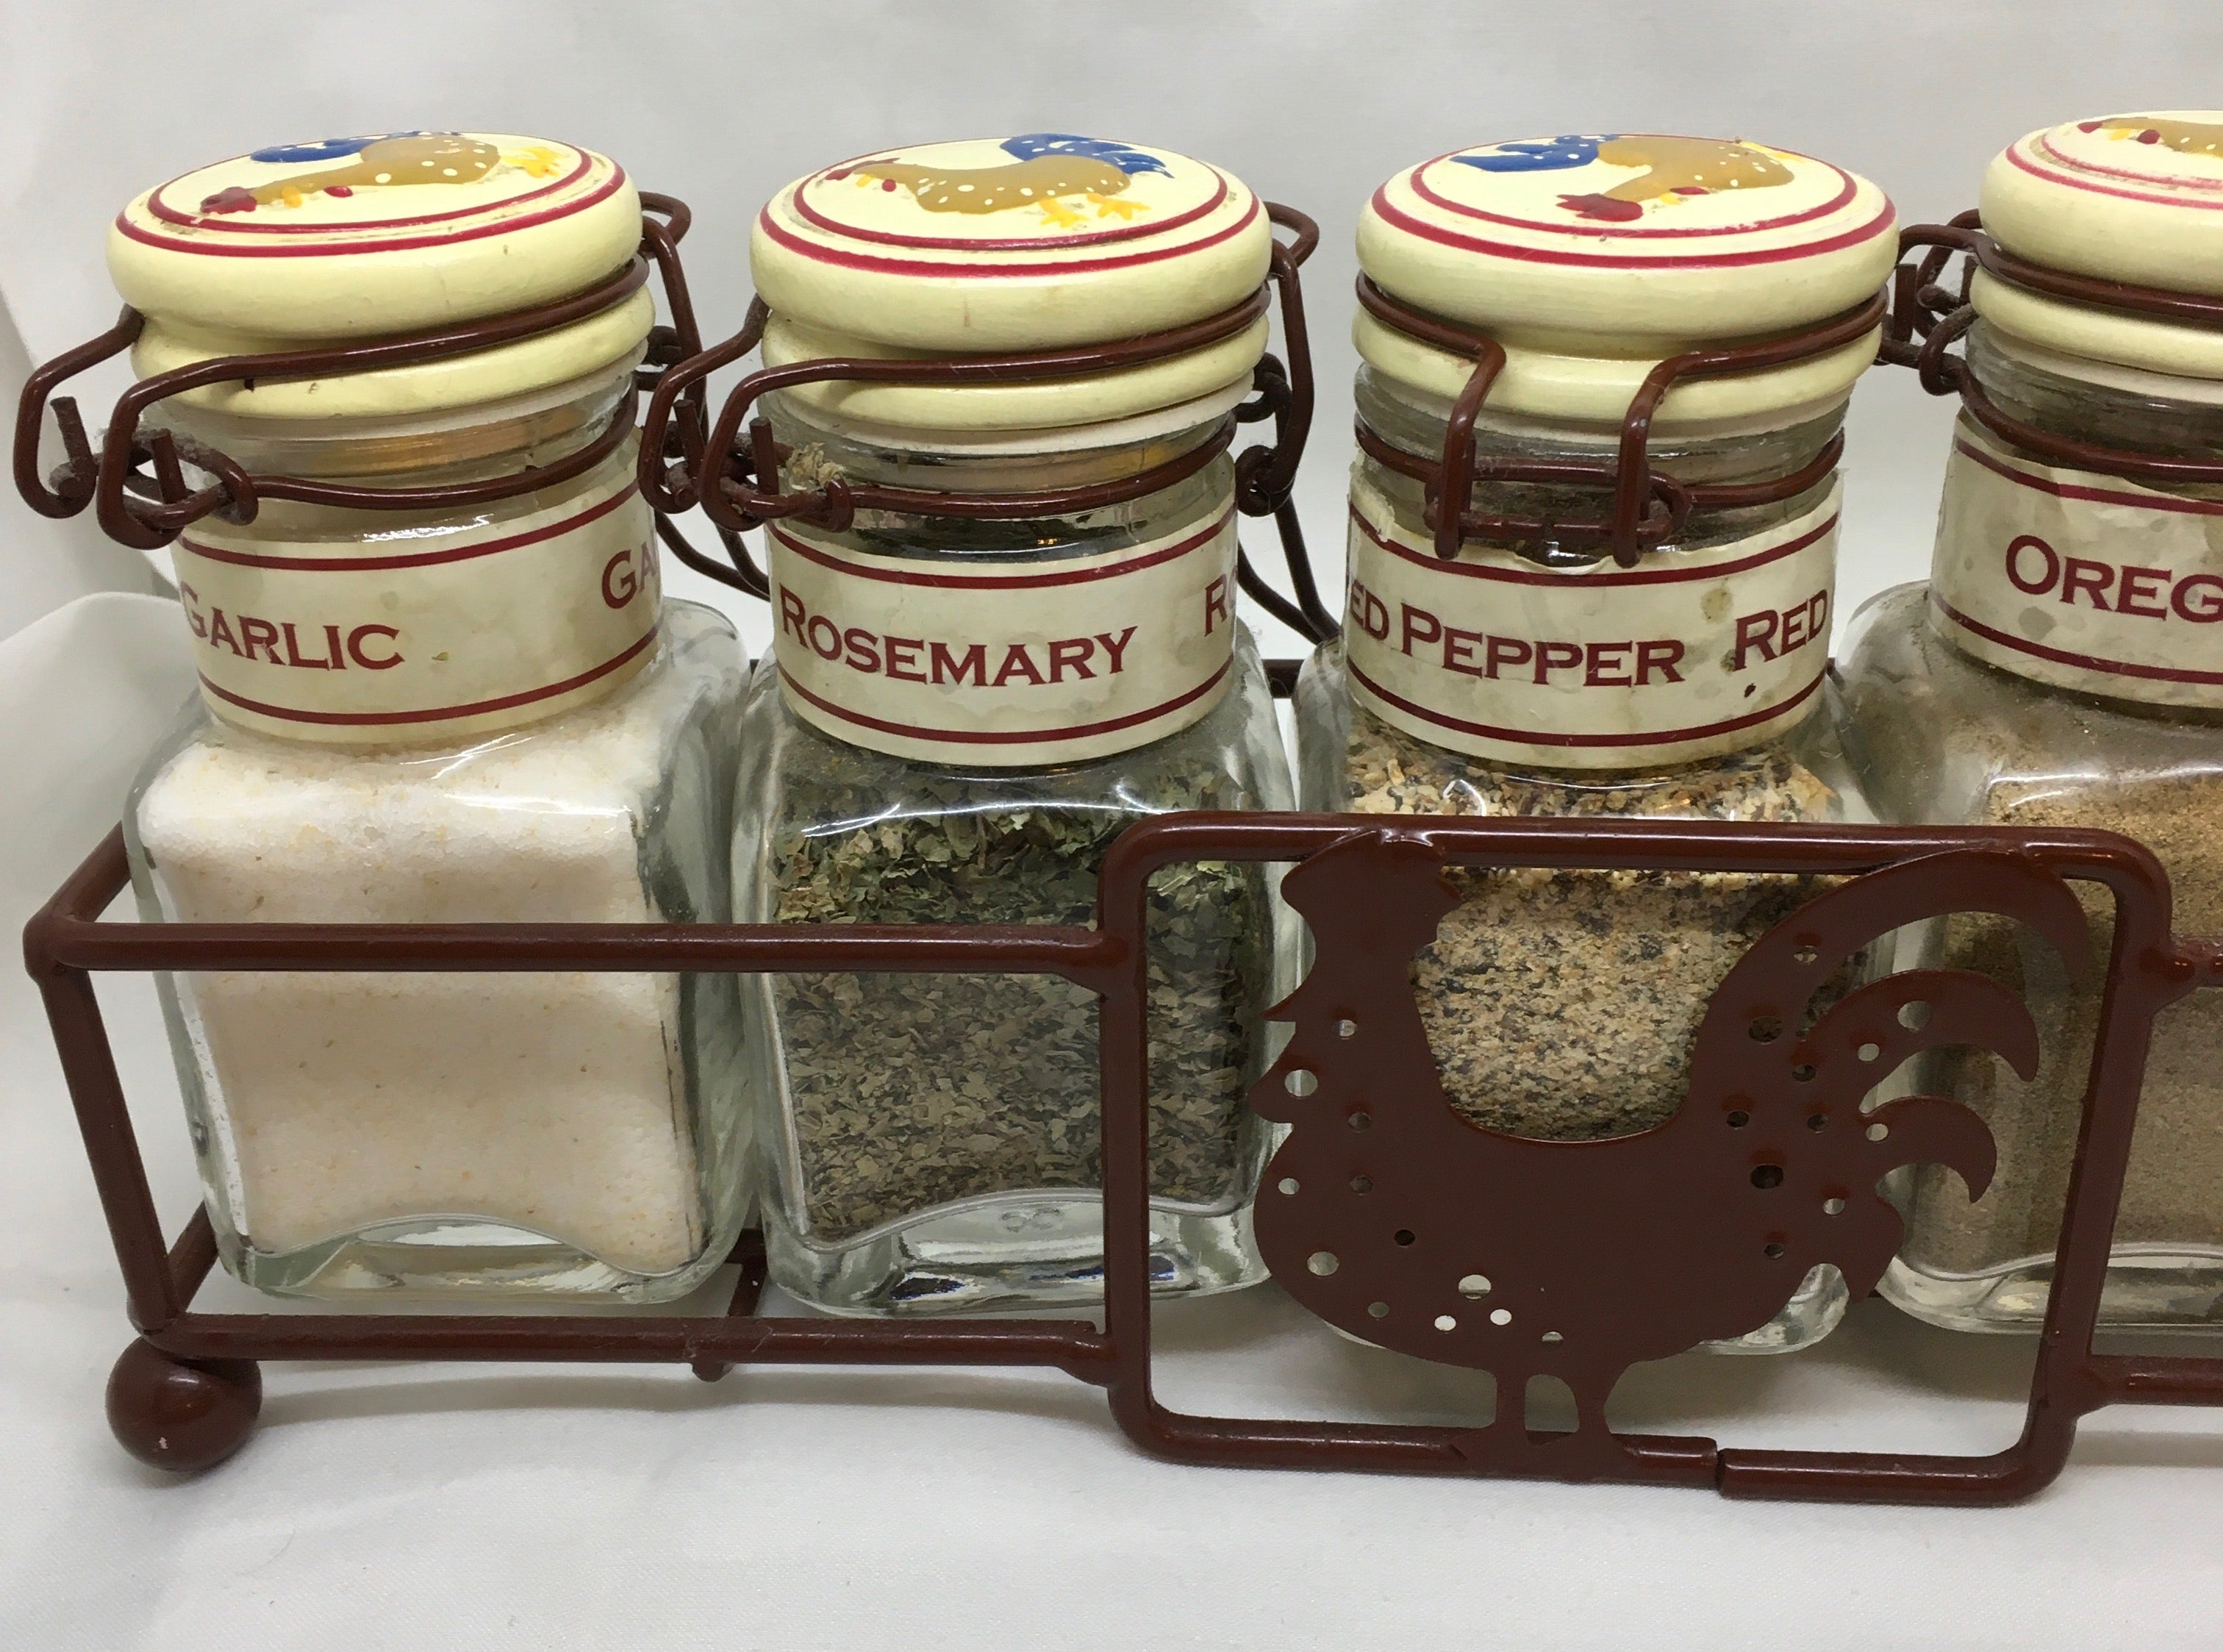 Vintage Wooden Spice Rack With 10 Milk Glass Spice Jars, Vintage Spice  Rack, Farmhouse Decor, Milk Glass Spice Jars 